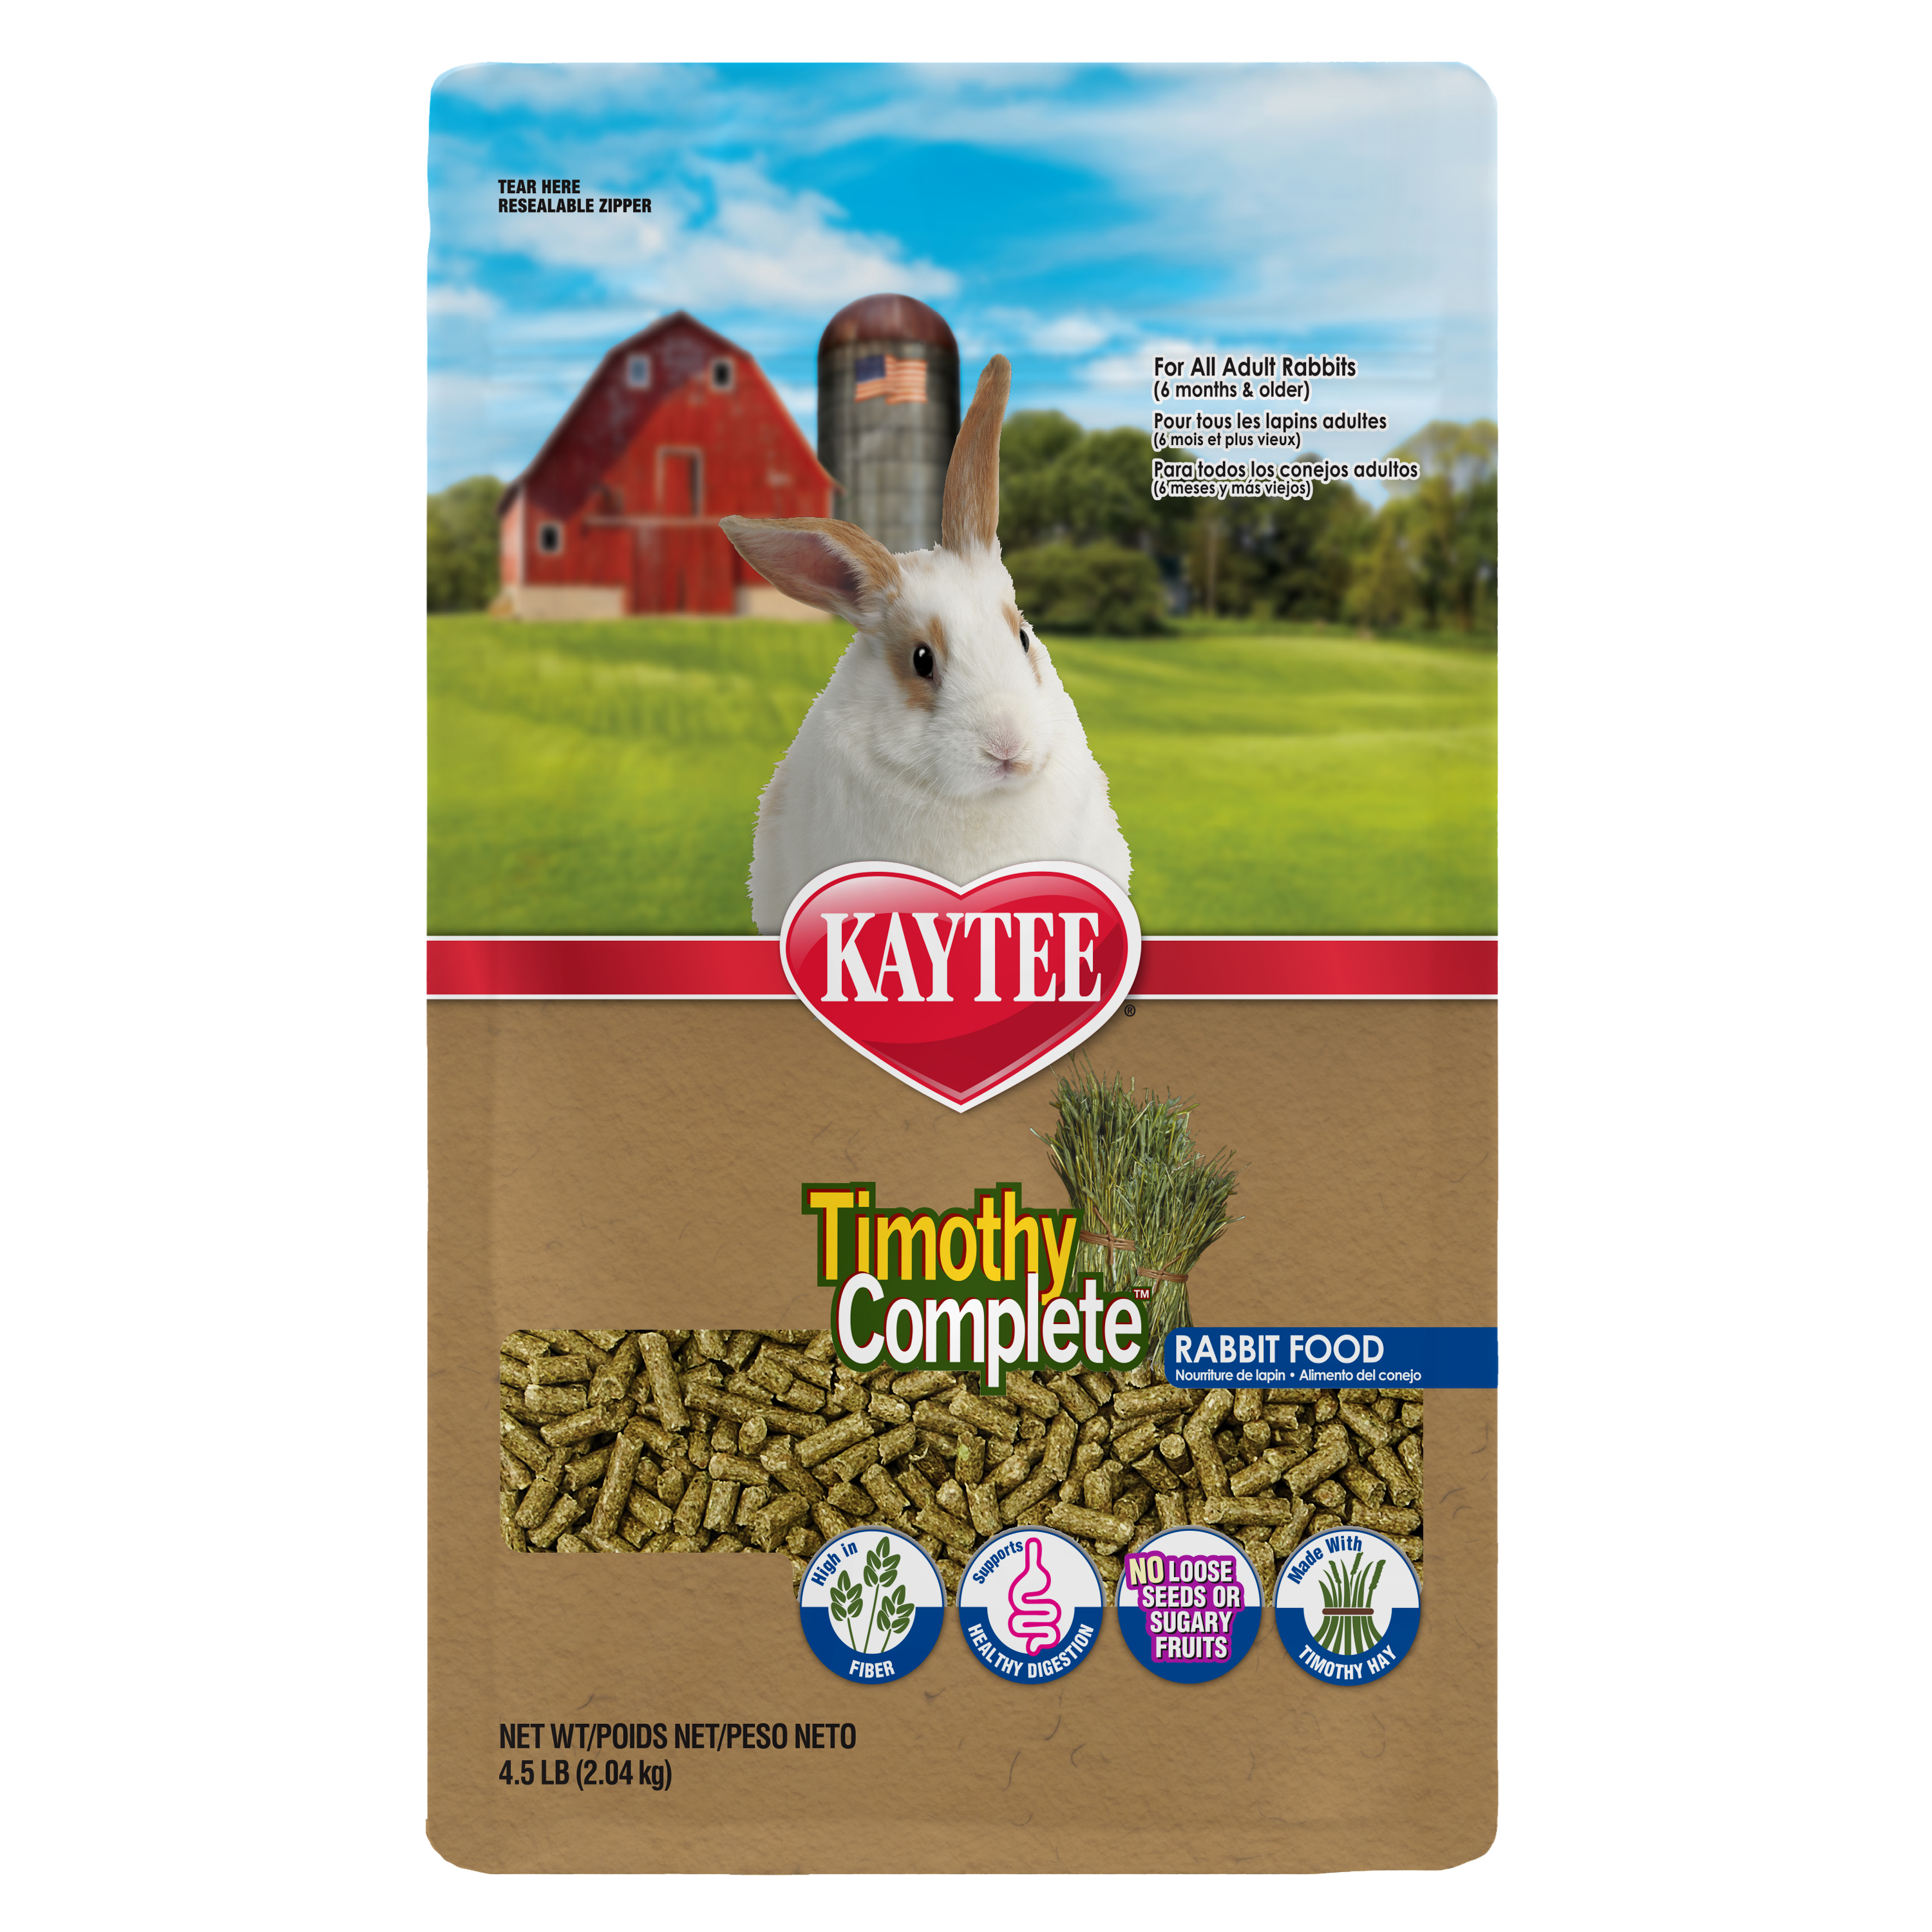 Kaytee Premium Alfalfa Free Timothy Fiber Diet for Rabbits